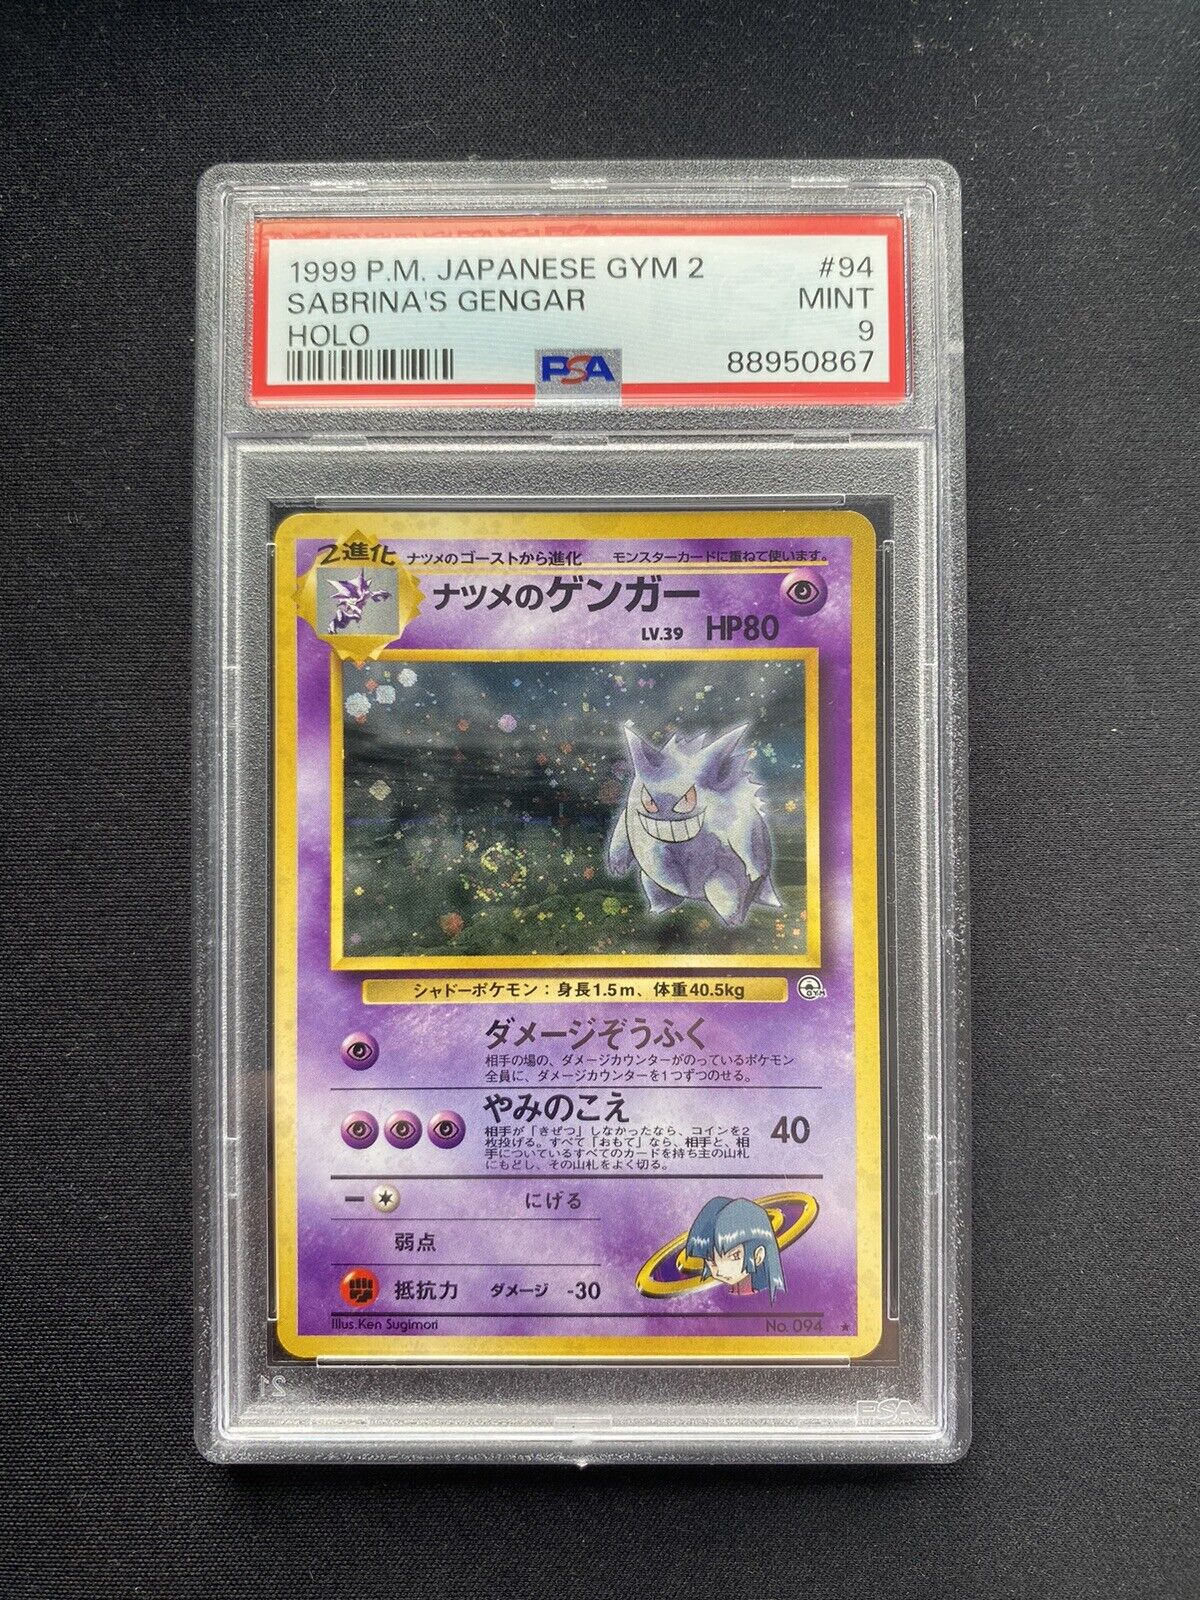 Pokémon TCG Sabrina’s Gengar Gym 2 Banned/Swirl PSA 9 Mint Japanese Card.